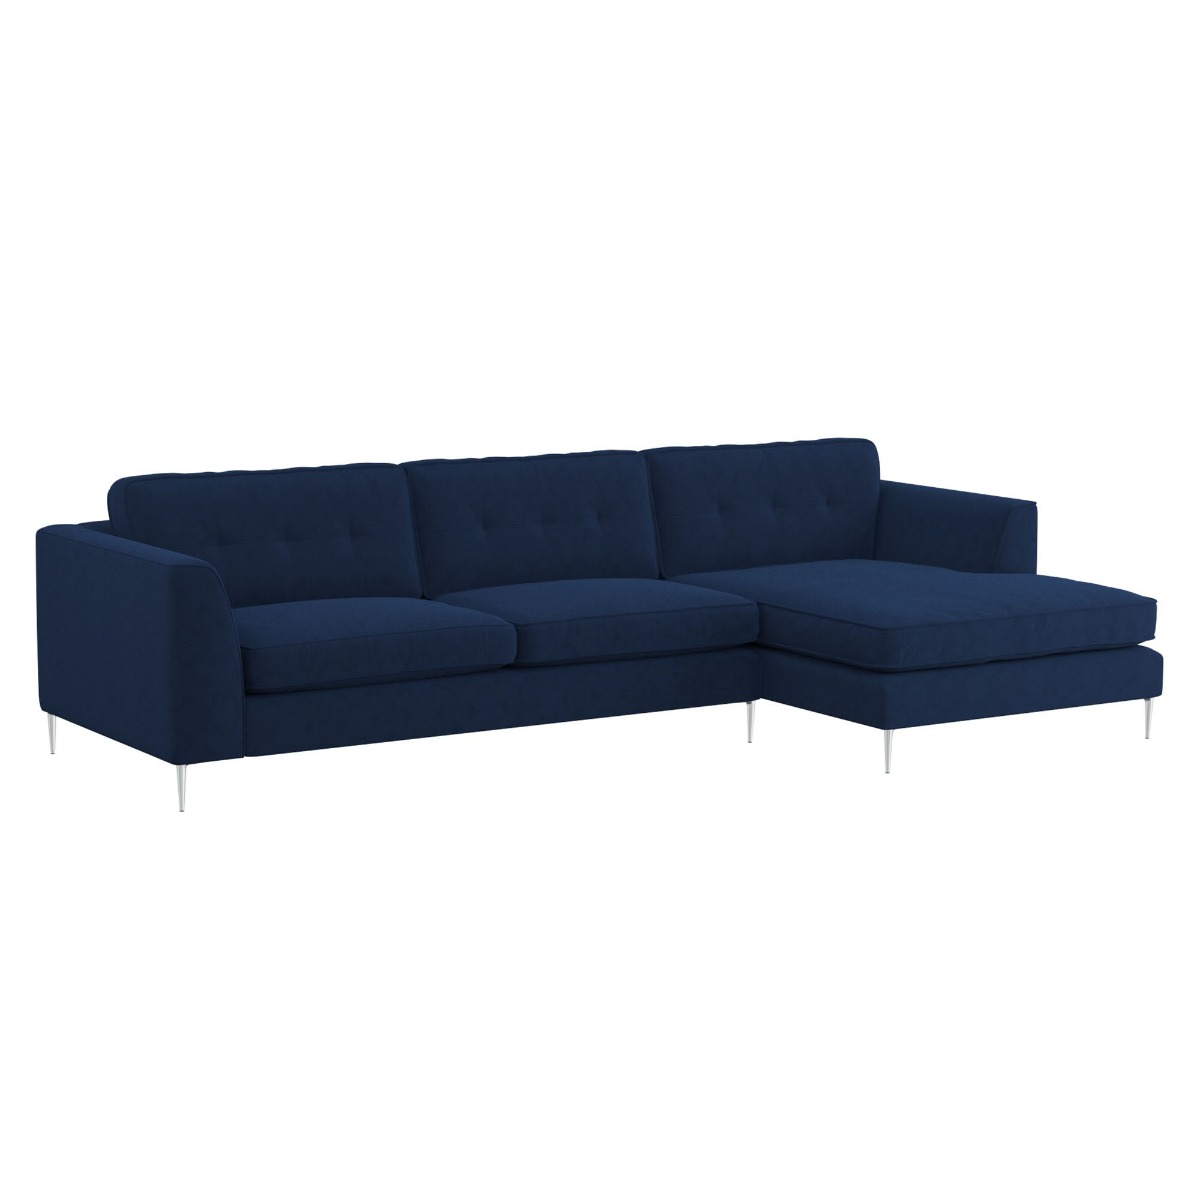 Conza Large Chaise Corner Sofa Right, Blue Fabric | Barker & Stonehouse